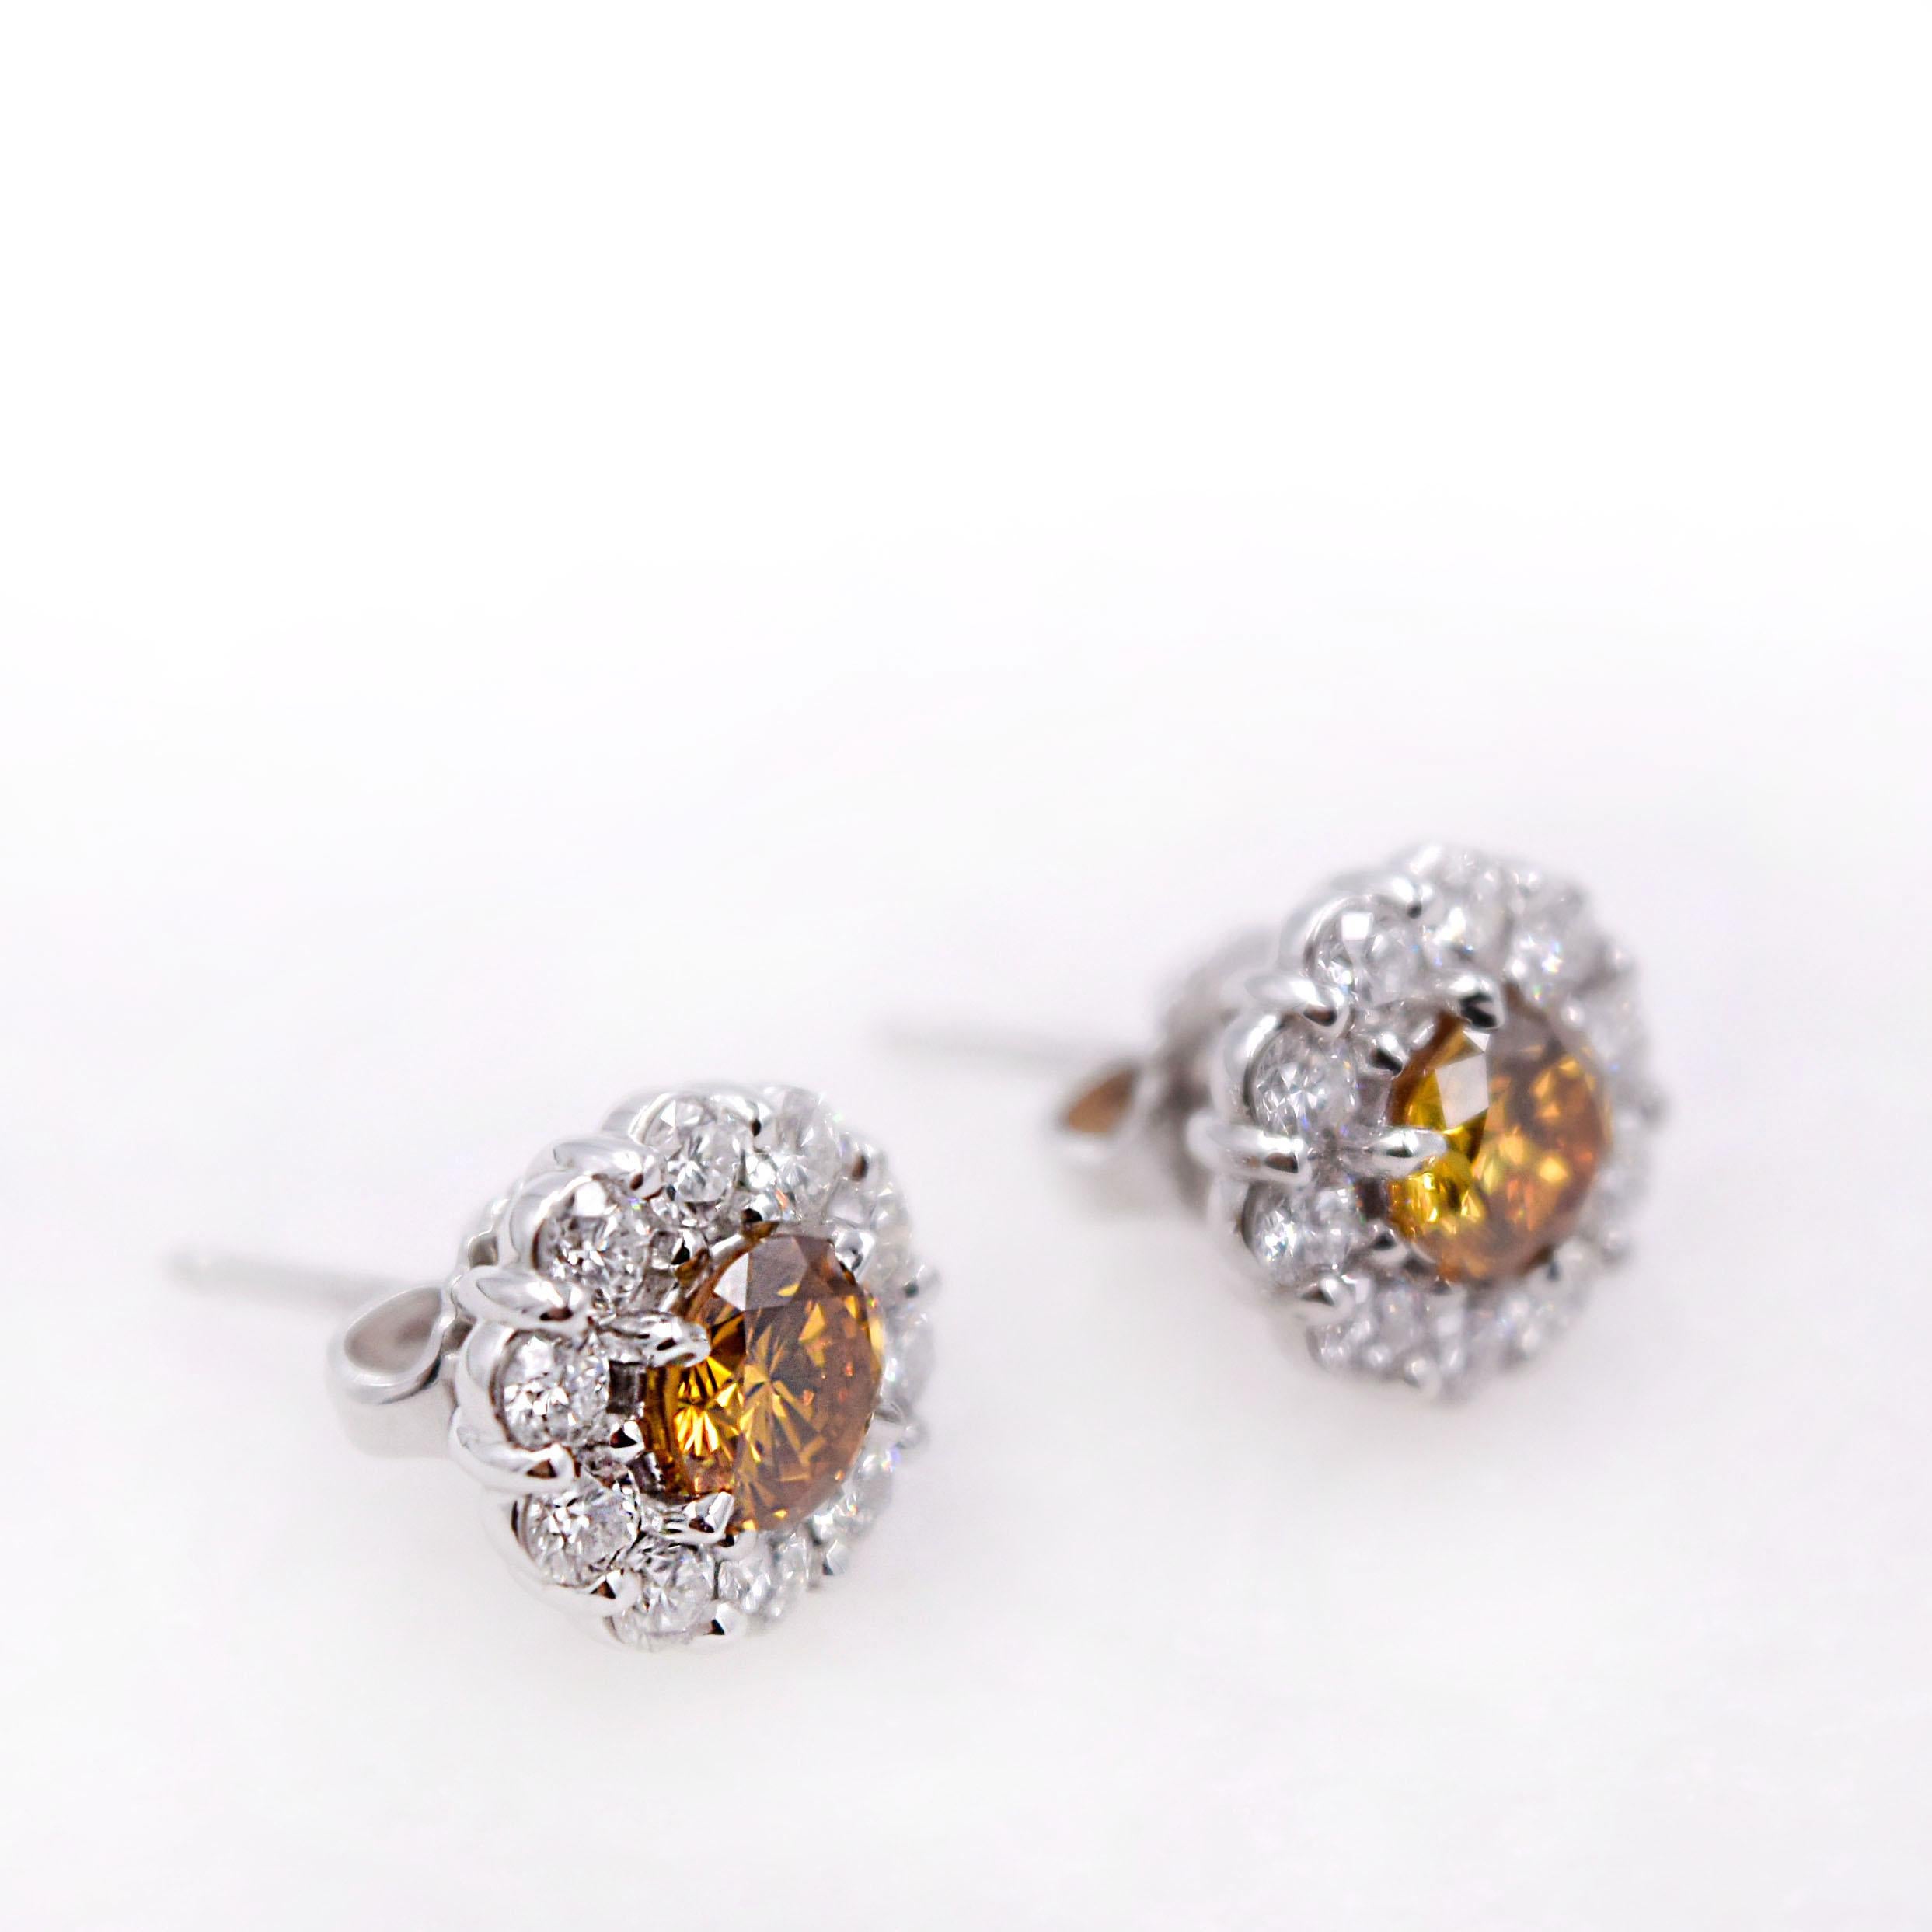 A rare GIA certified pair of colored diamond earrings:
- 0.50 Carat Fancy Deep Yellow Orange GIA#1172397231 
- 0.47 Carat Fancy Deep Brown-Yellow GIA#2175396570
A total of 20 brilliant cut white diamonds 1.0 carats.
Total diamond weight is 1.97